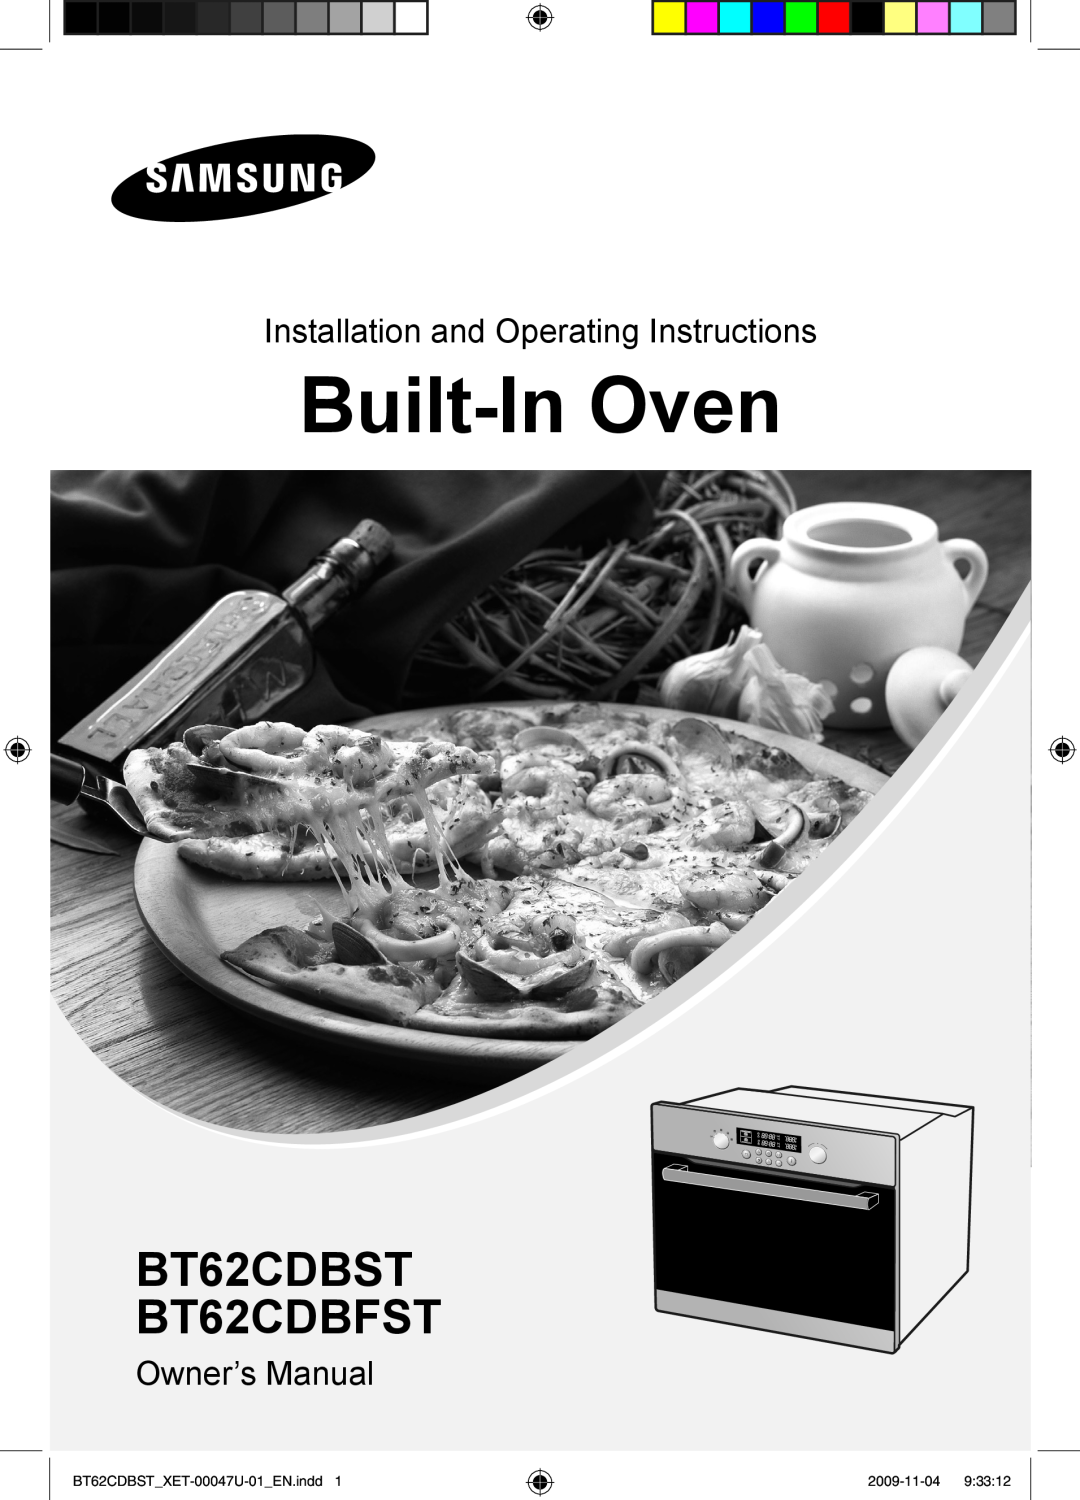 Samsung BT62CDBST/XET manual Built-In Oven, BT62CDBST BT62CDBFST, Installation and Operating Instructions, Owner’s Manual 